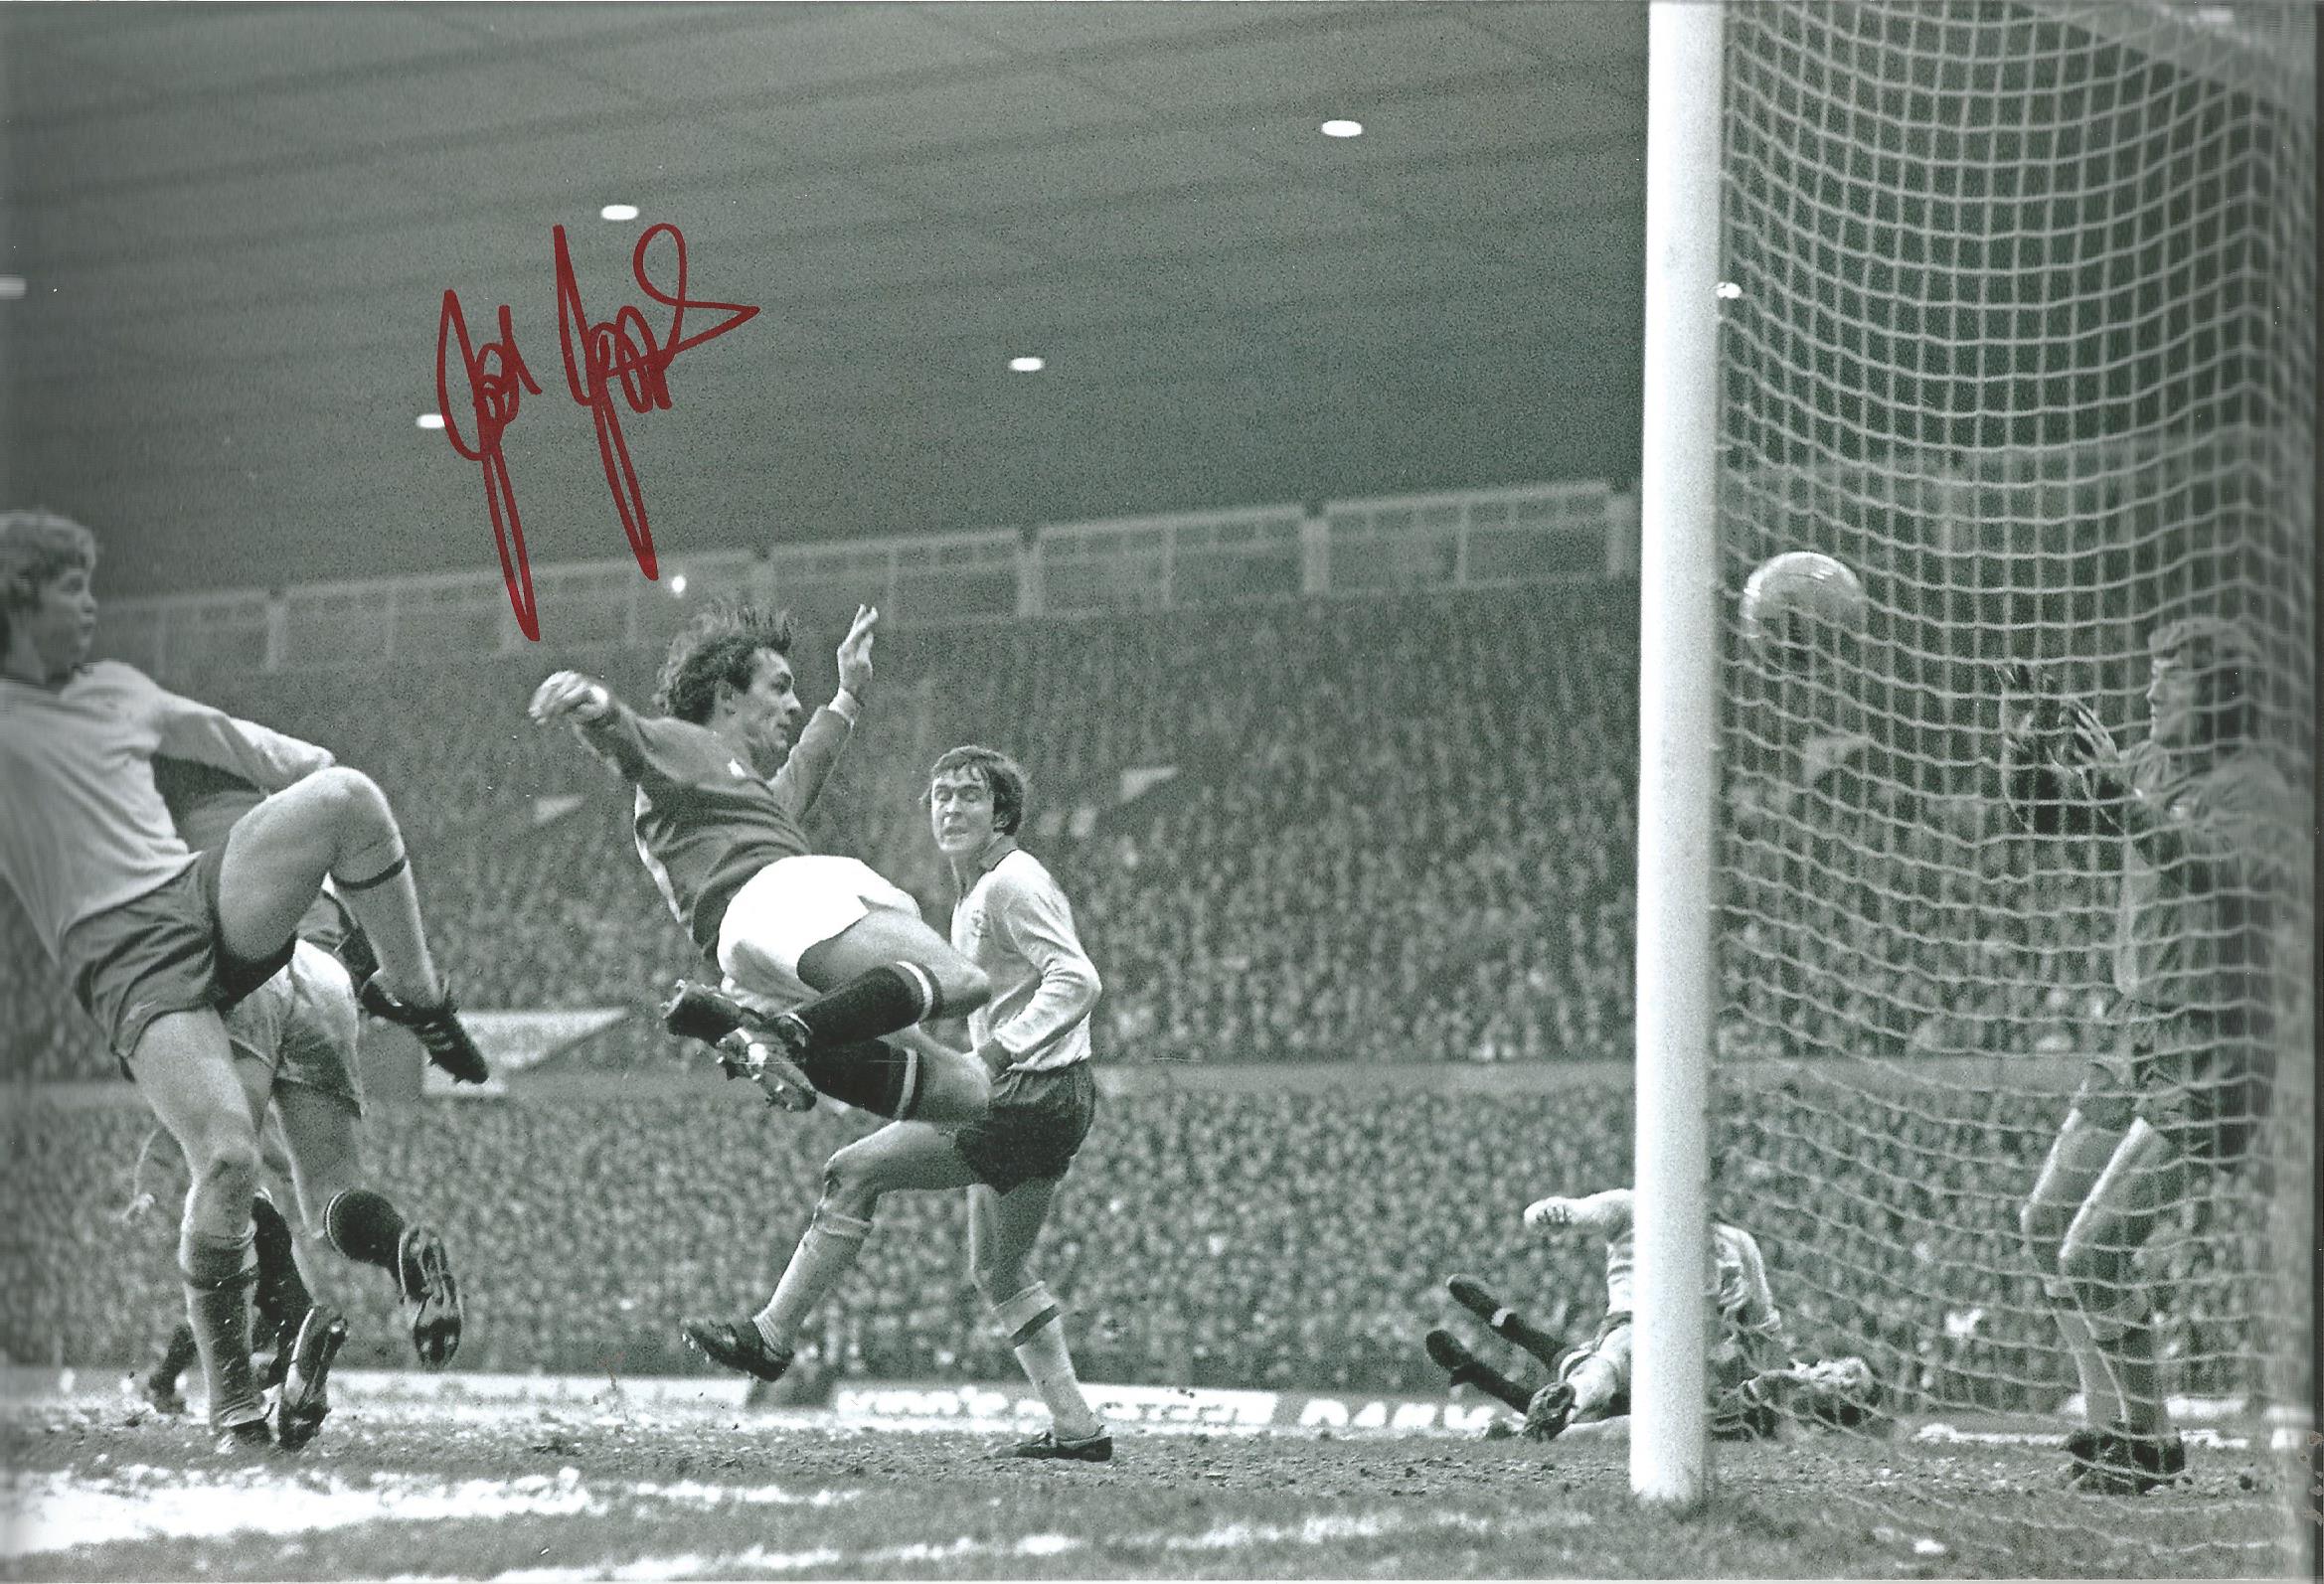 Football Autographed 12 x 8 photo, depicting Manchester United striker Joe Jordan acrobatically